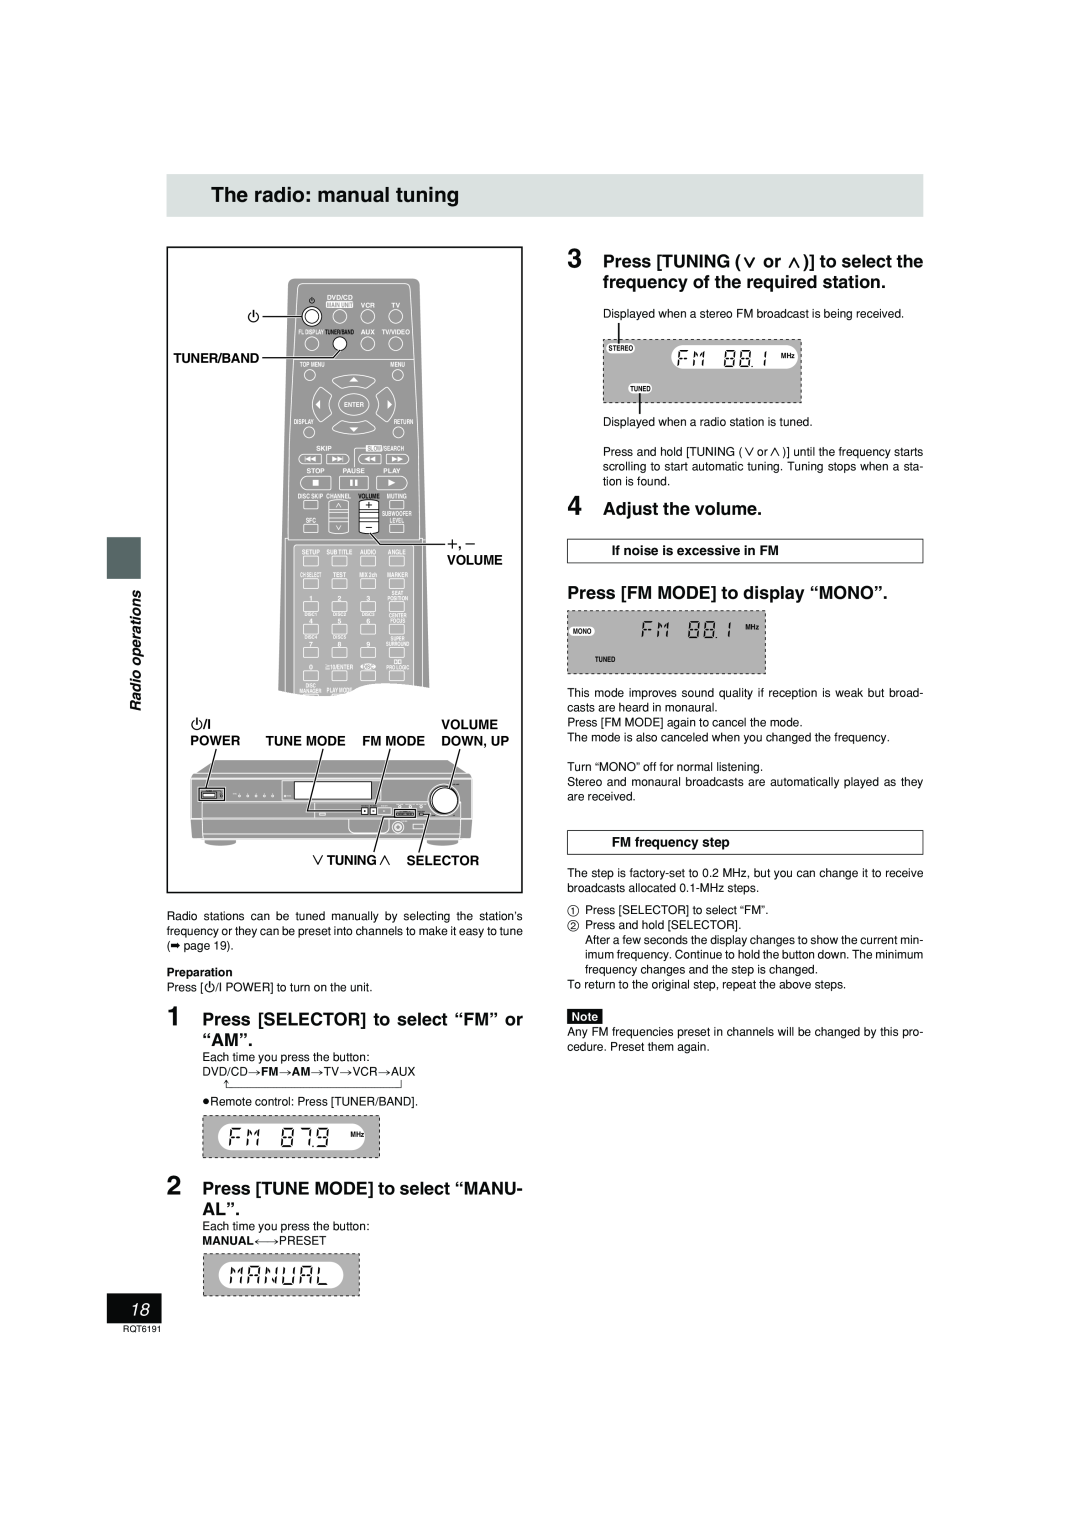 Panasonic SC-HT67 The radio manual tuning, 4Adjust the volume, Press FM MODE to display “MONO”, Tuner/Band, r, s, Volume 